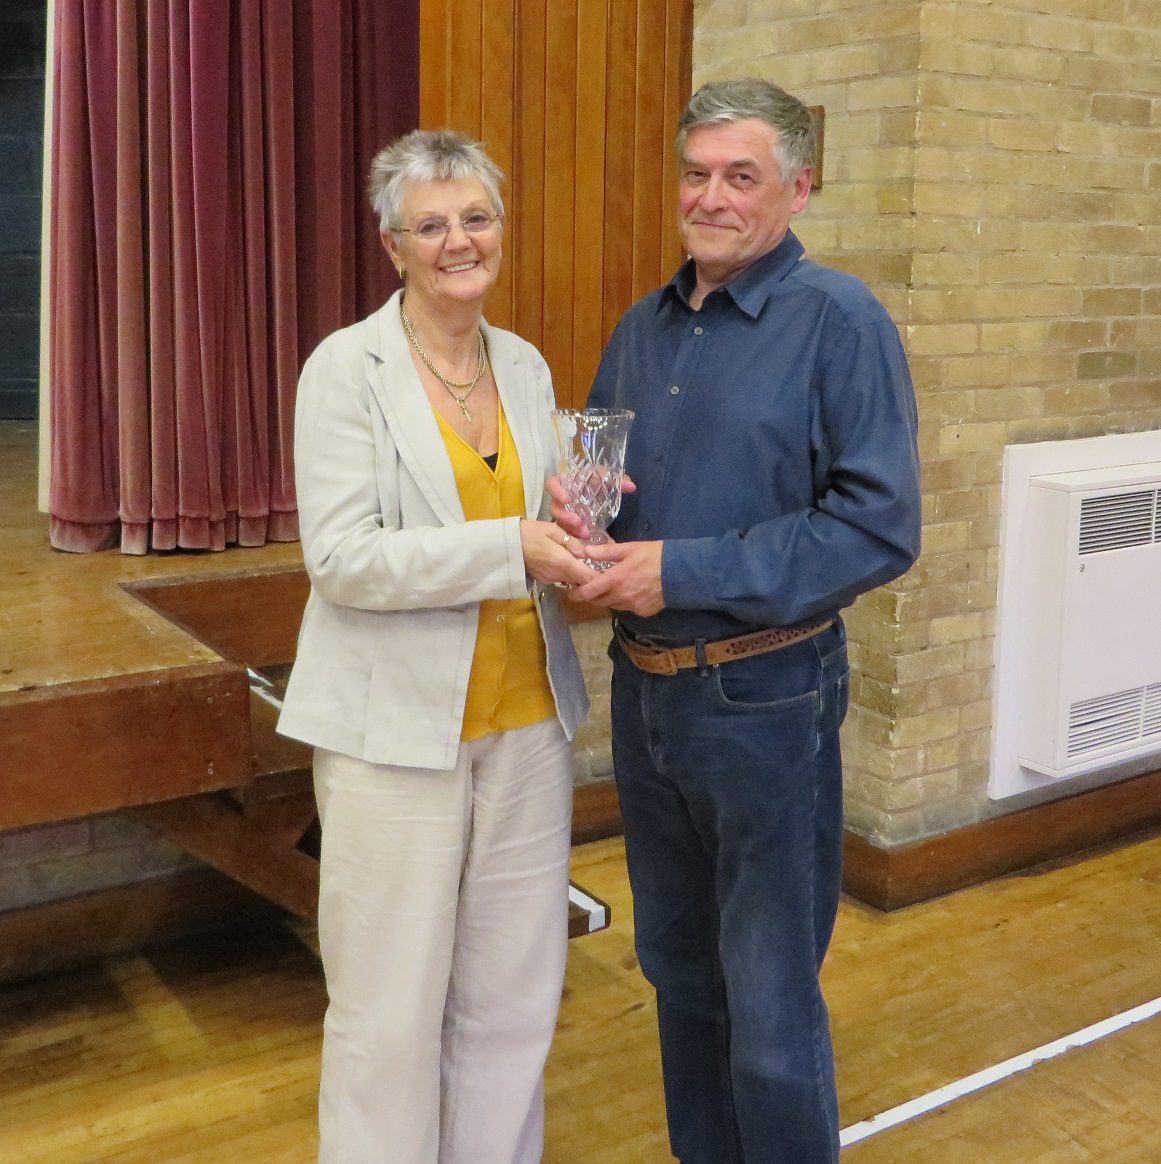 Betty Kirk Award for Contribution to RTG - John Birch